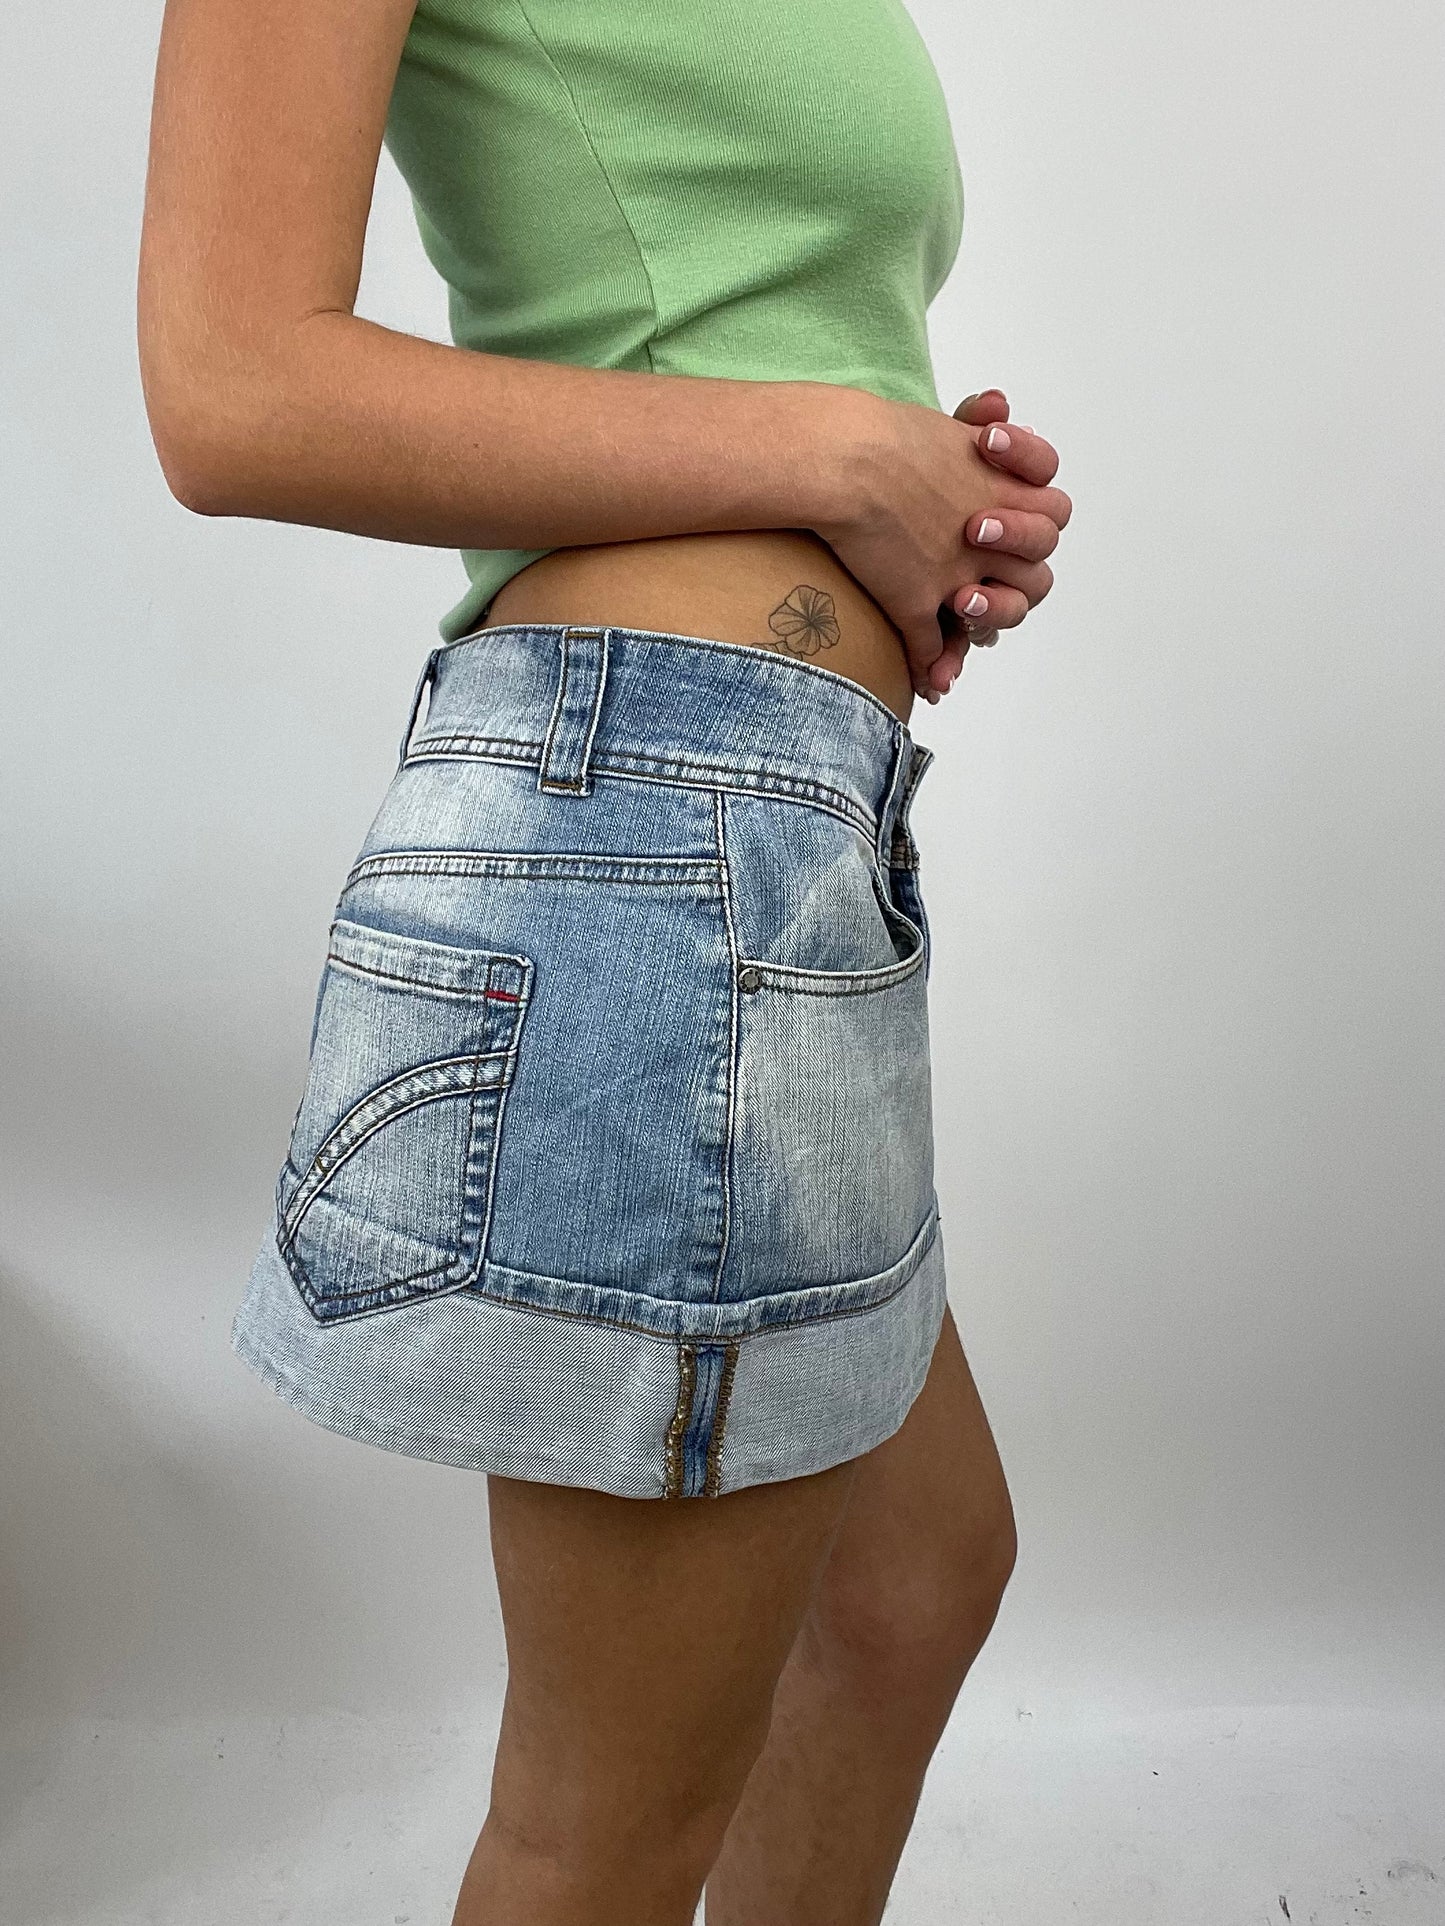 ADDISON RAE DROP | medium light denim mini skirt with folded hem